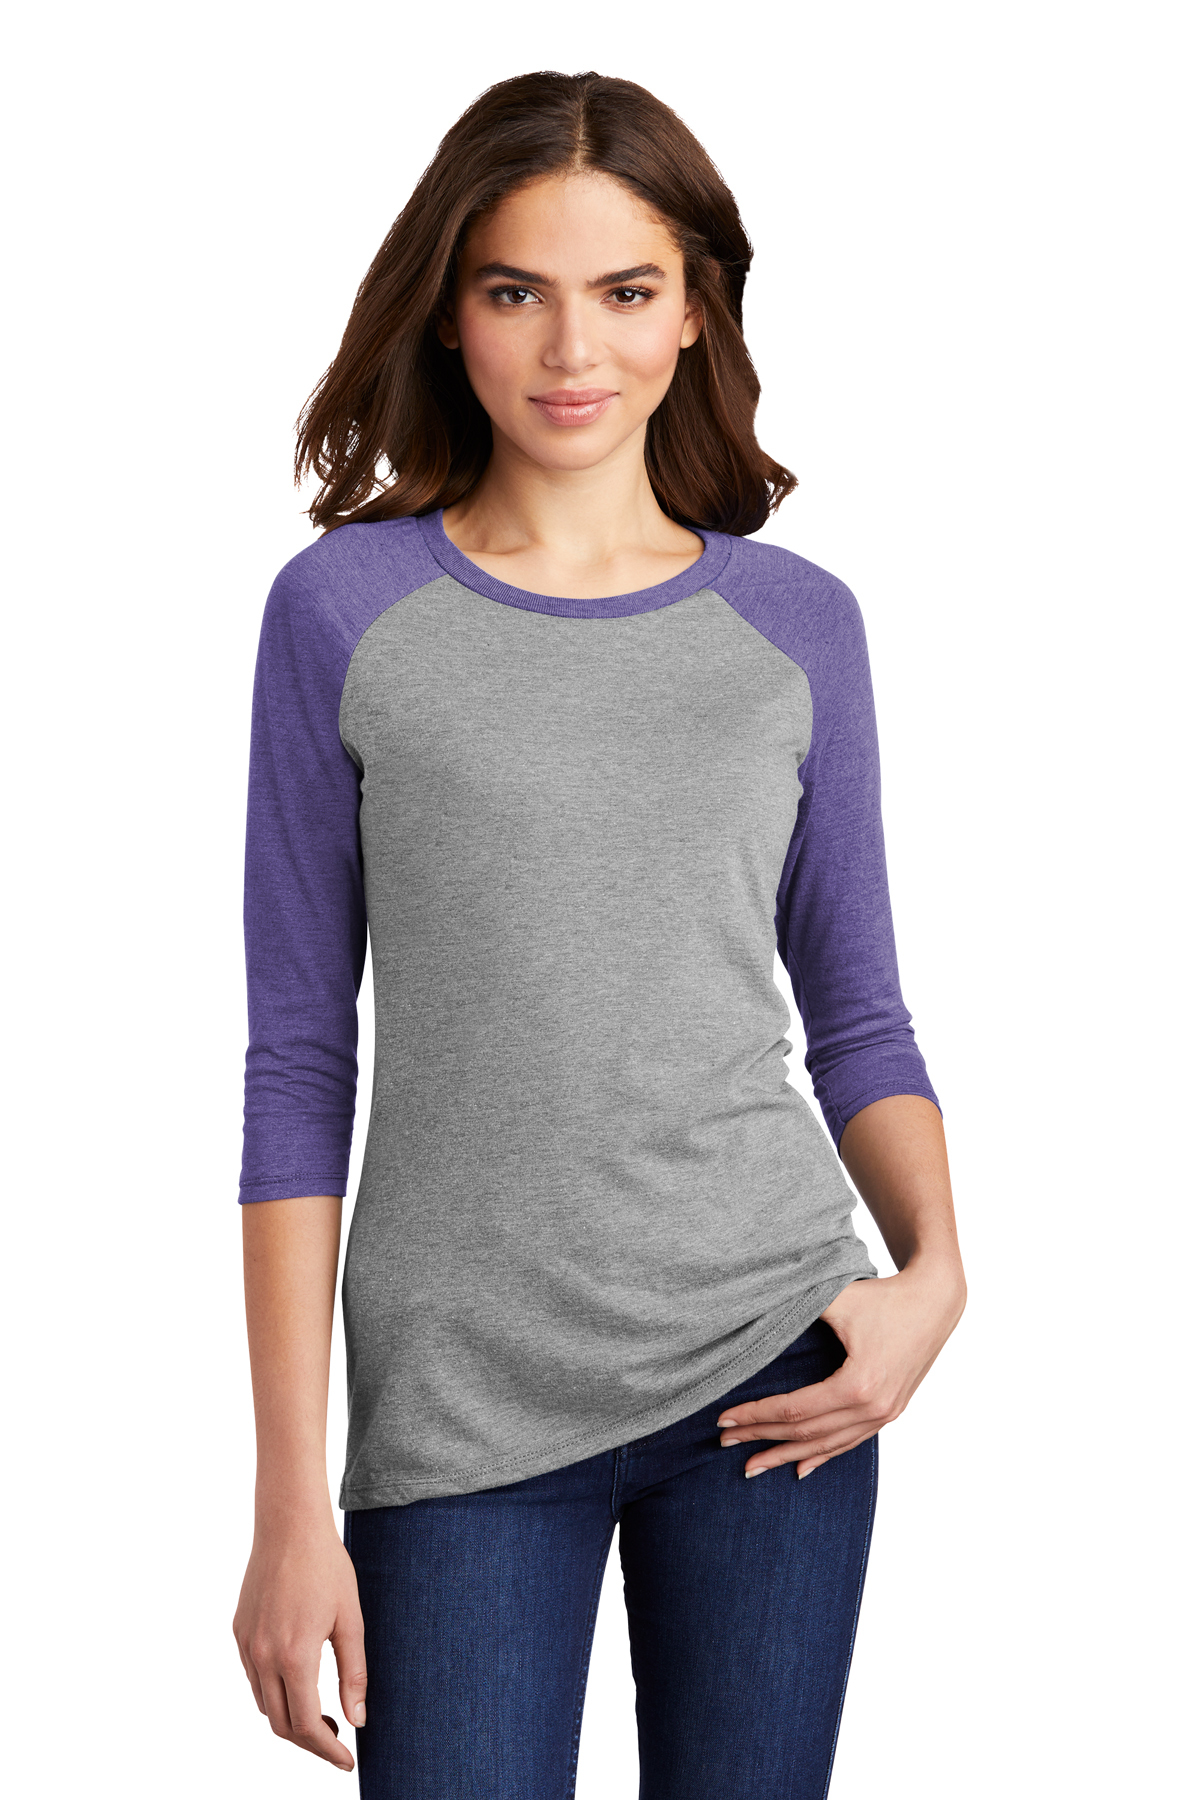 purple raglan shirt